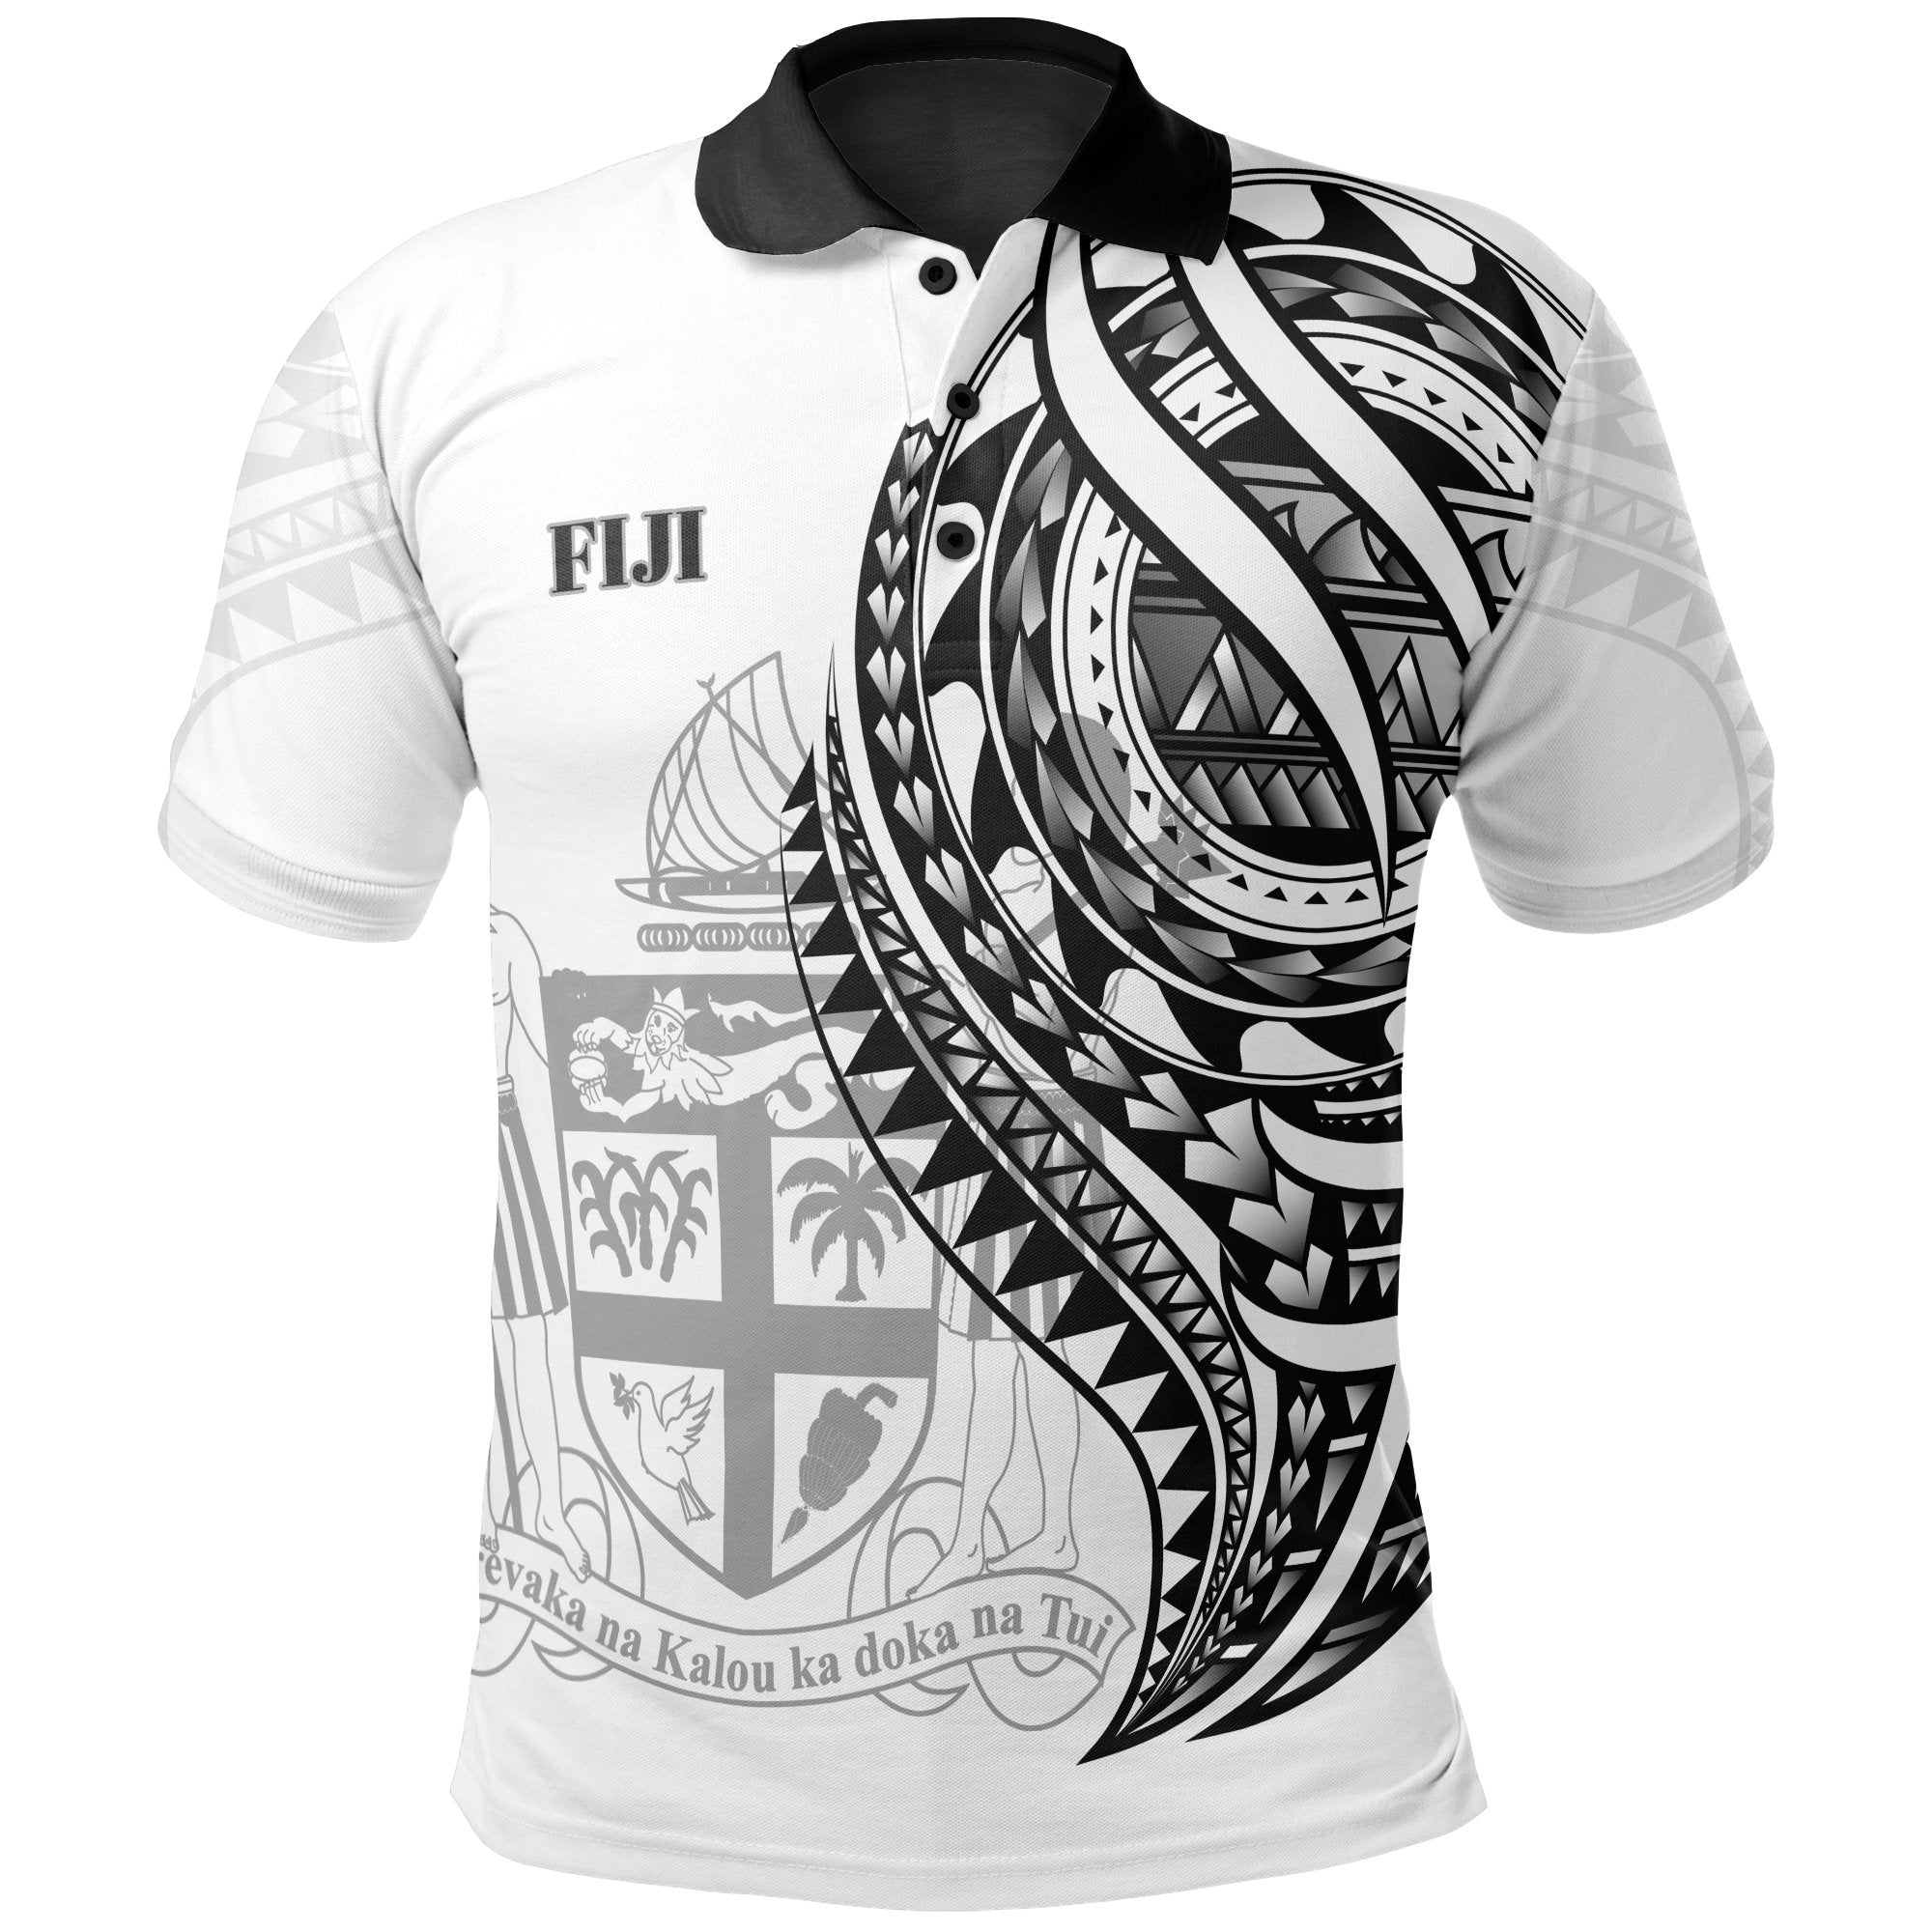 Fiji Polo Shirt Black Color Polynesian Patterns Best Fiji Ever Unisex White - Polynesian Pride